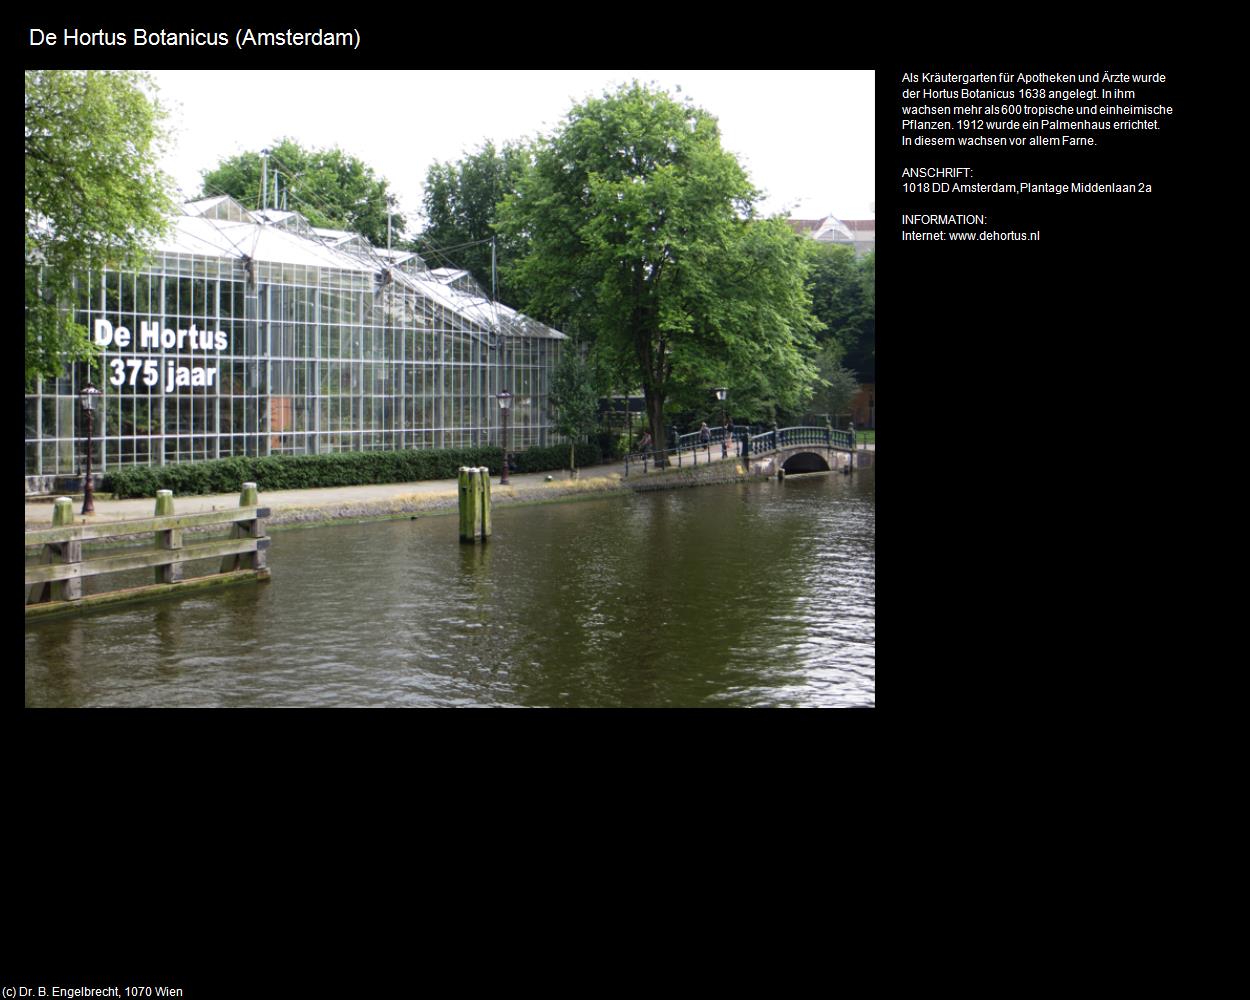 De Hortus Botanicus (Amsterdam) in Kulturatlas-NIEDERLANDE